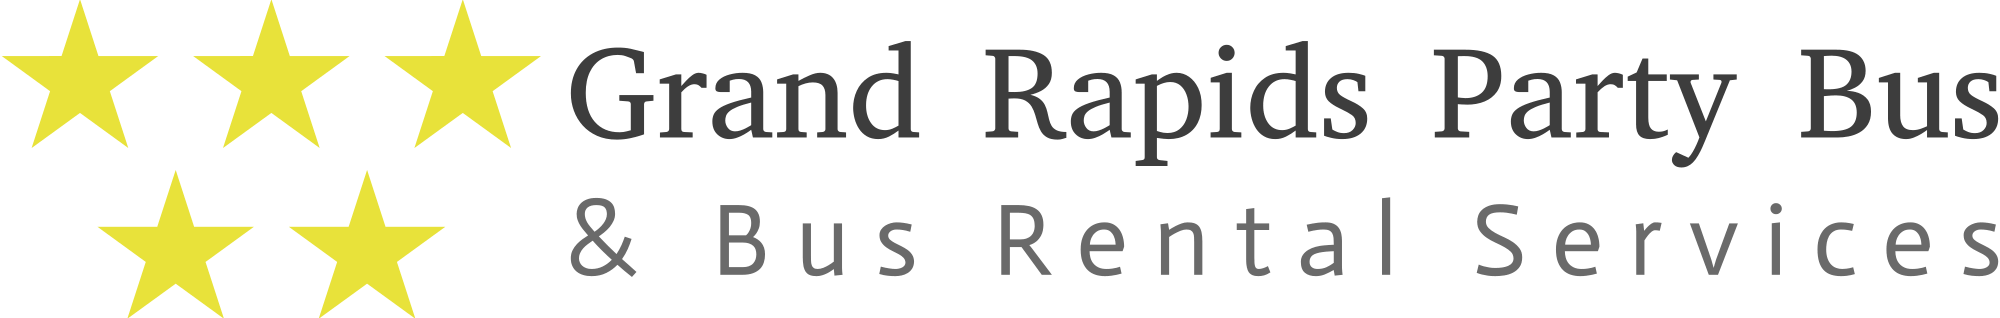 Party Bus Grand Rapids logo